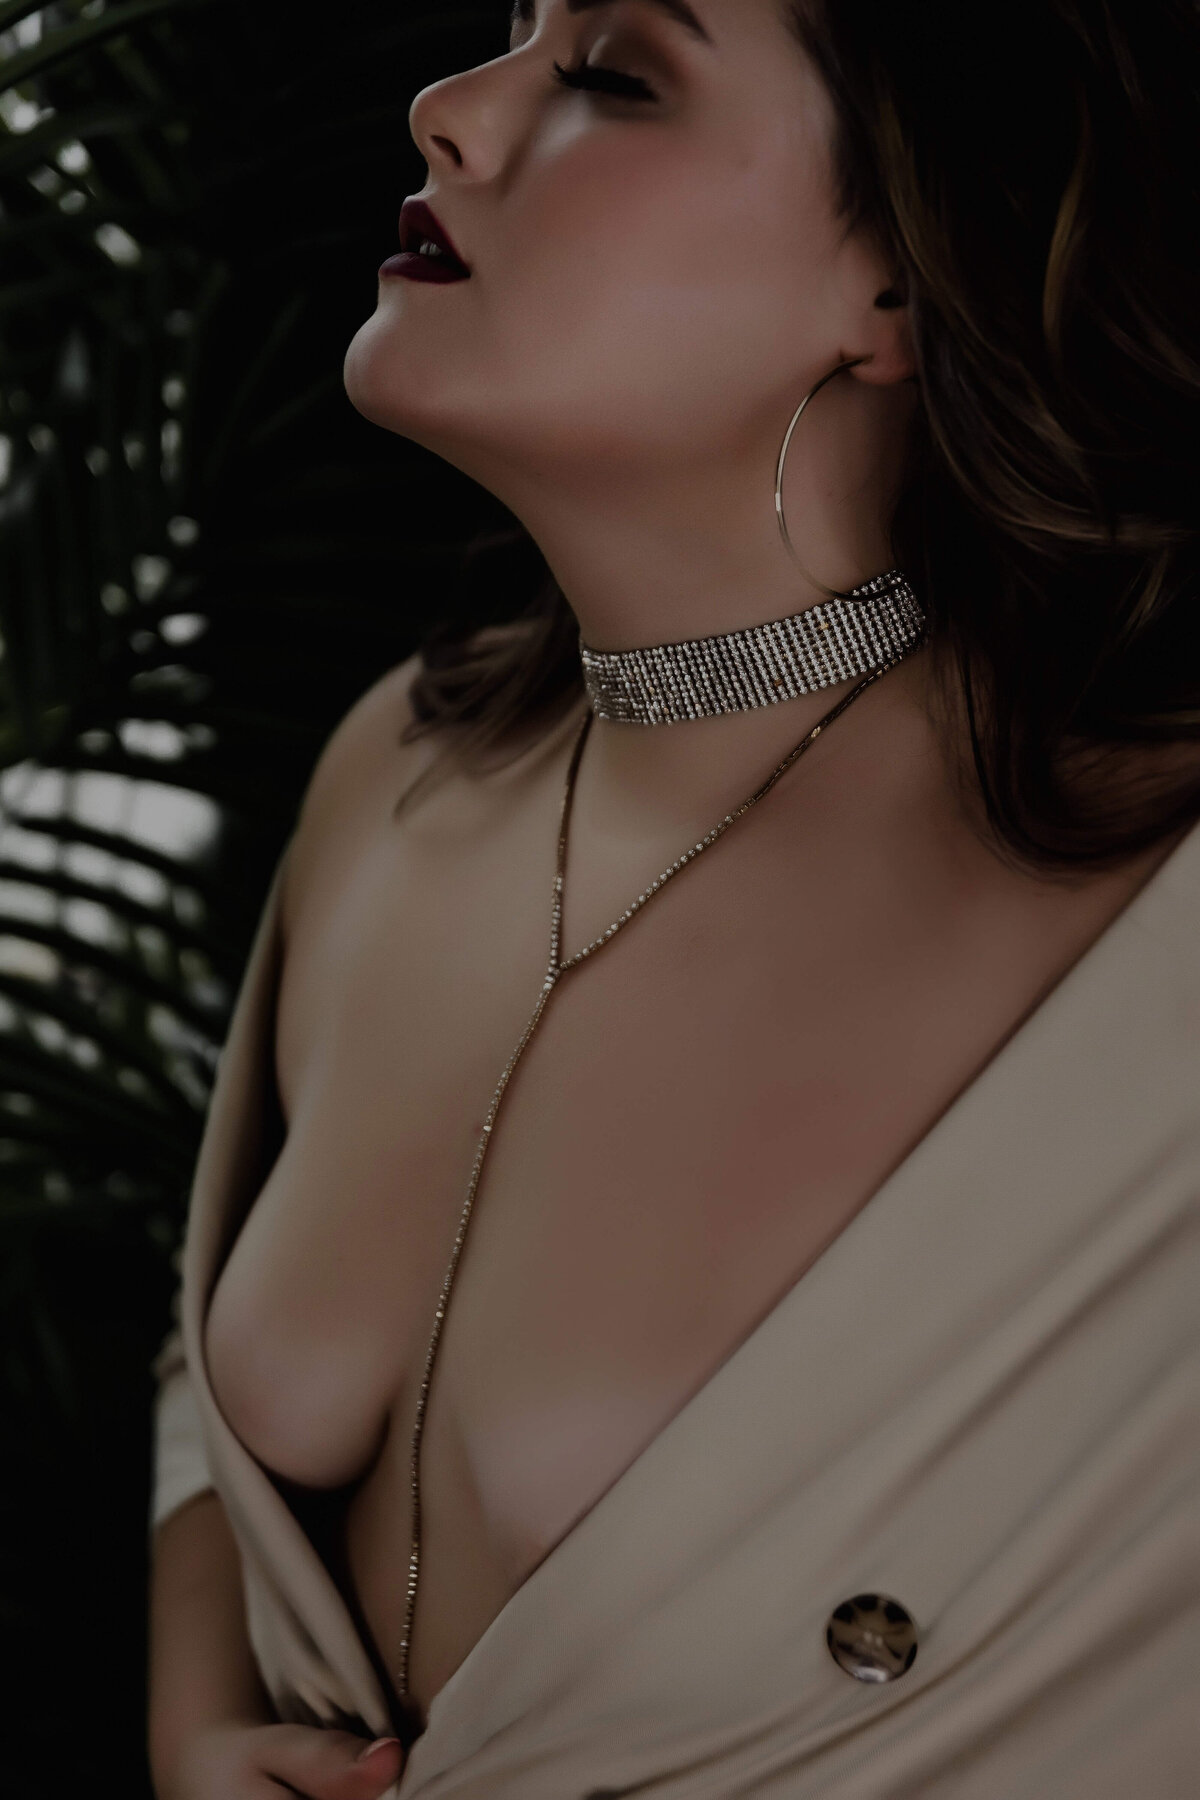 woman standing in body jewelry posing for boudoir